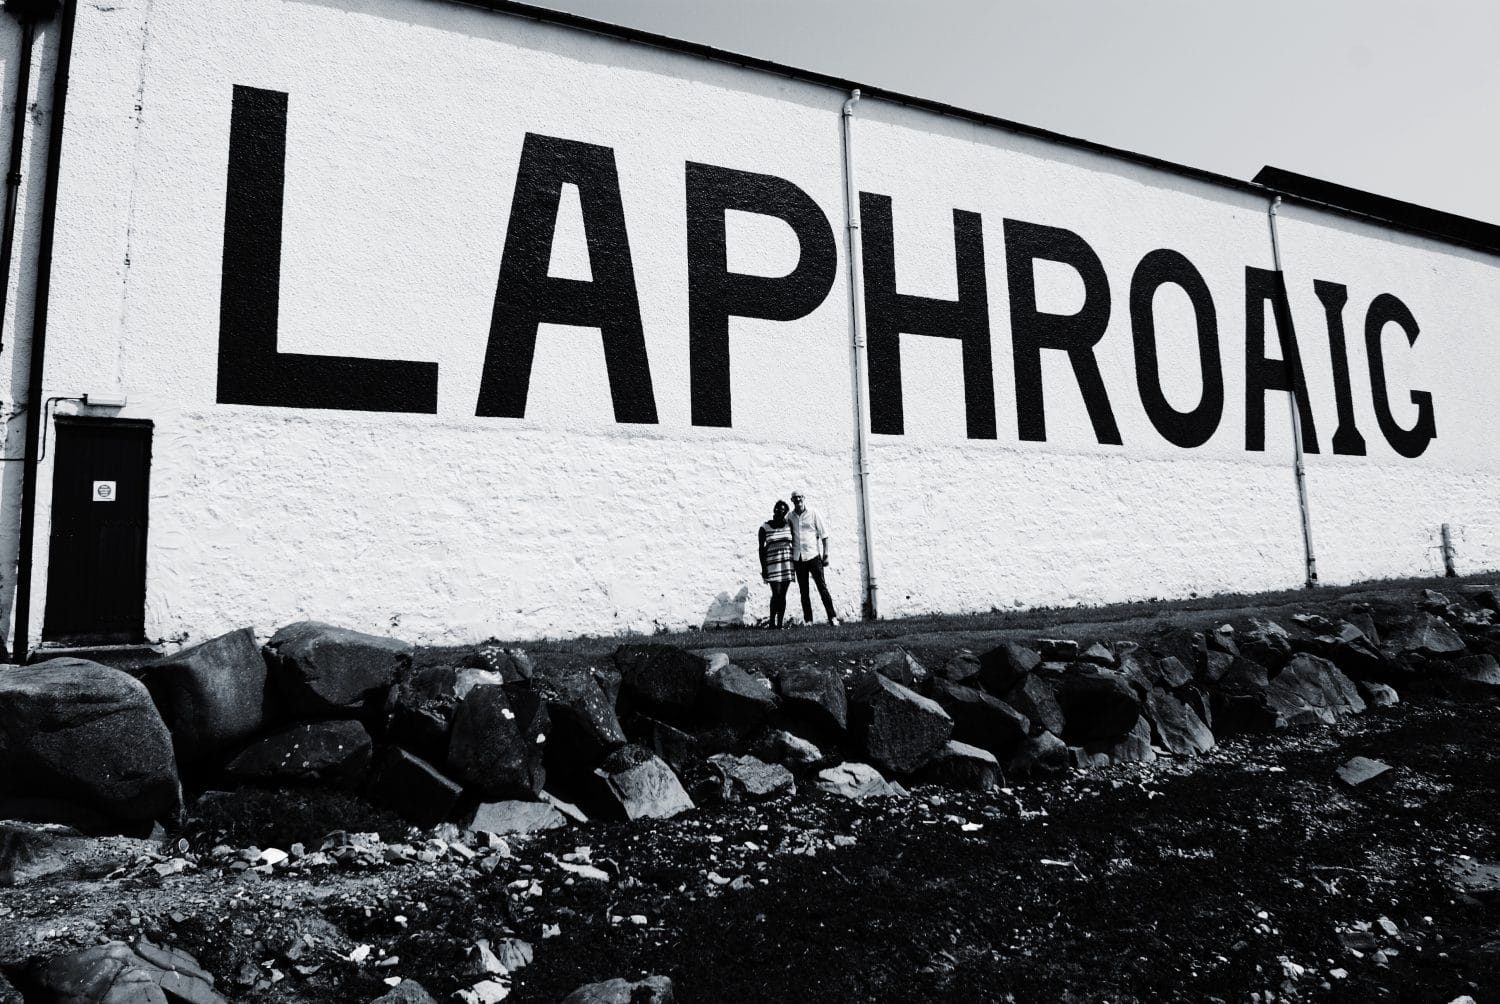 Laphroaig Distillery during Feis Ile